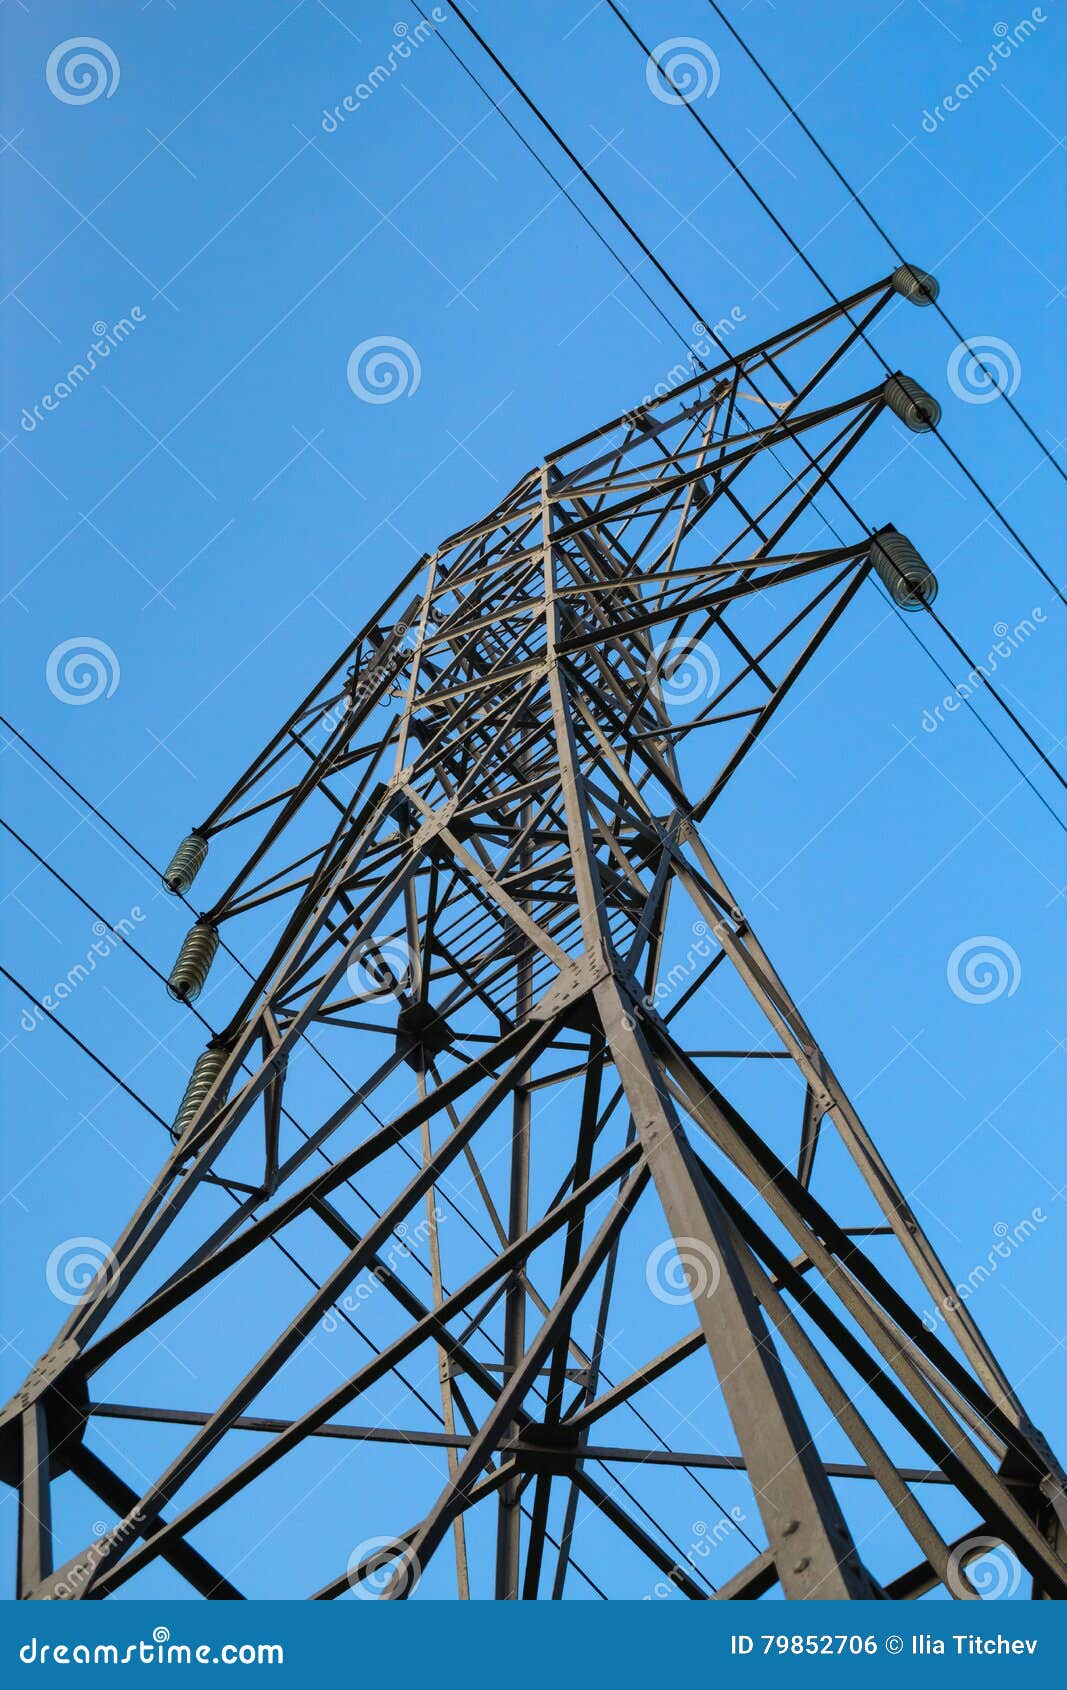 reliance power transmission tower 110kv